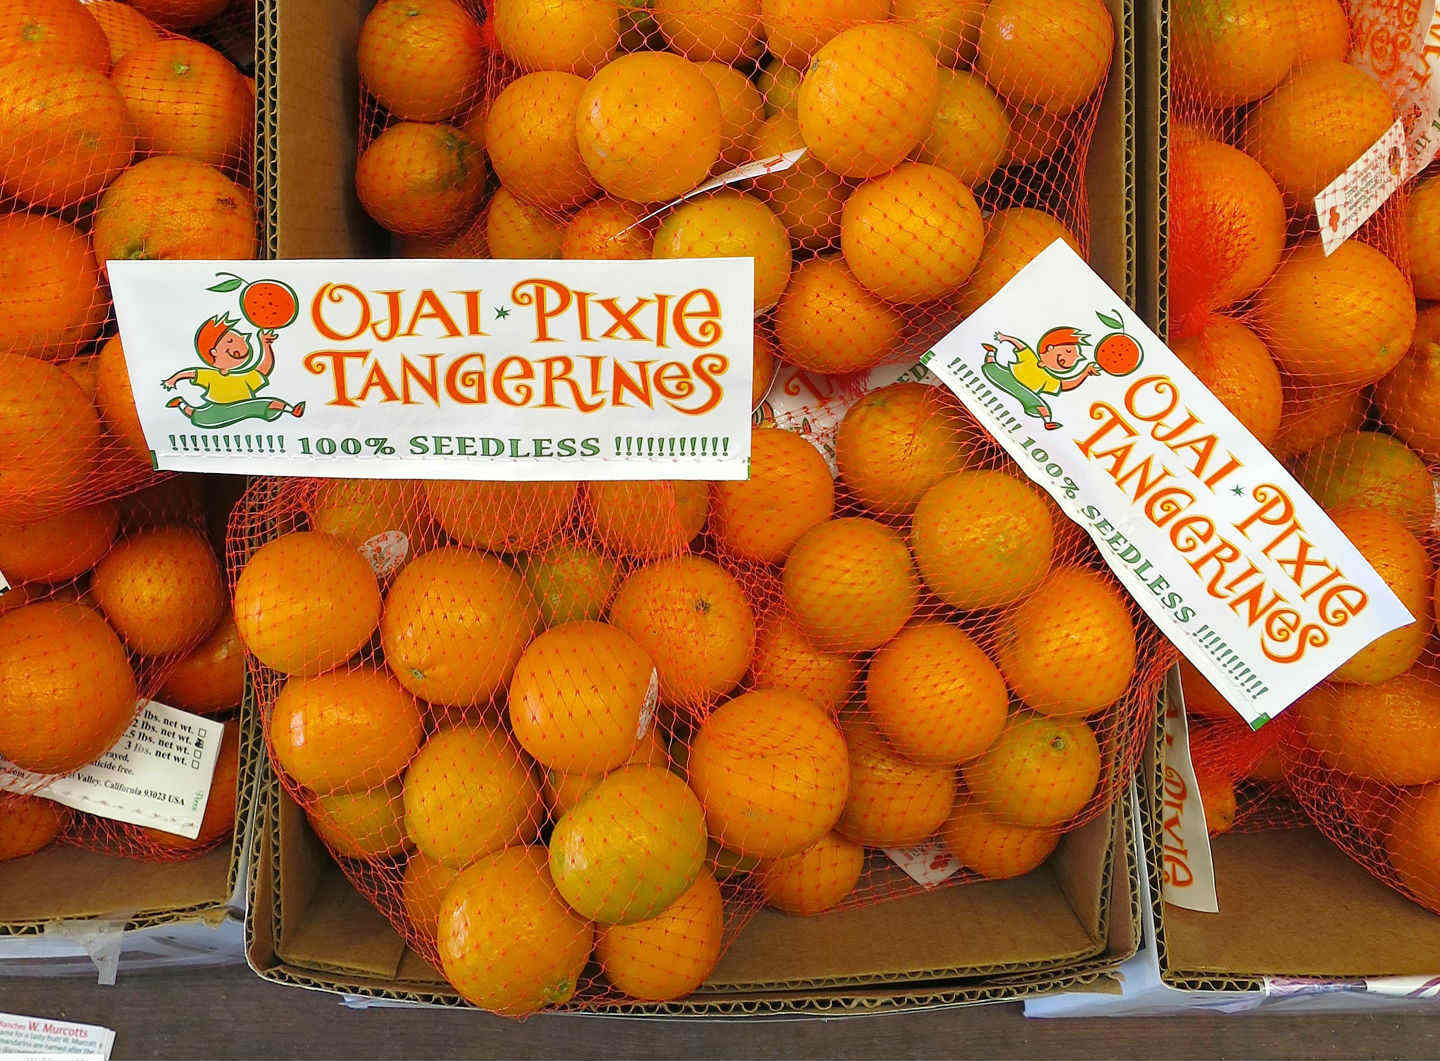 A bag of Ojai Pixie brand tangerines.